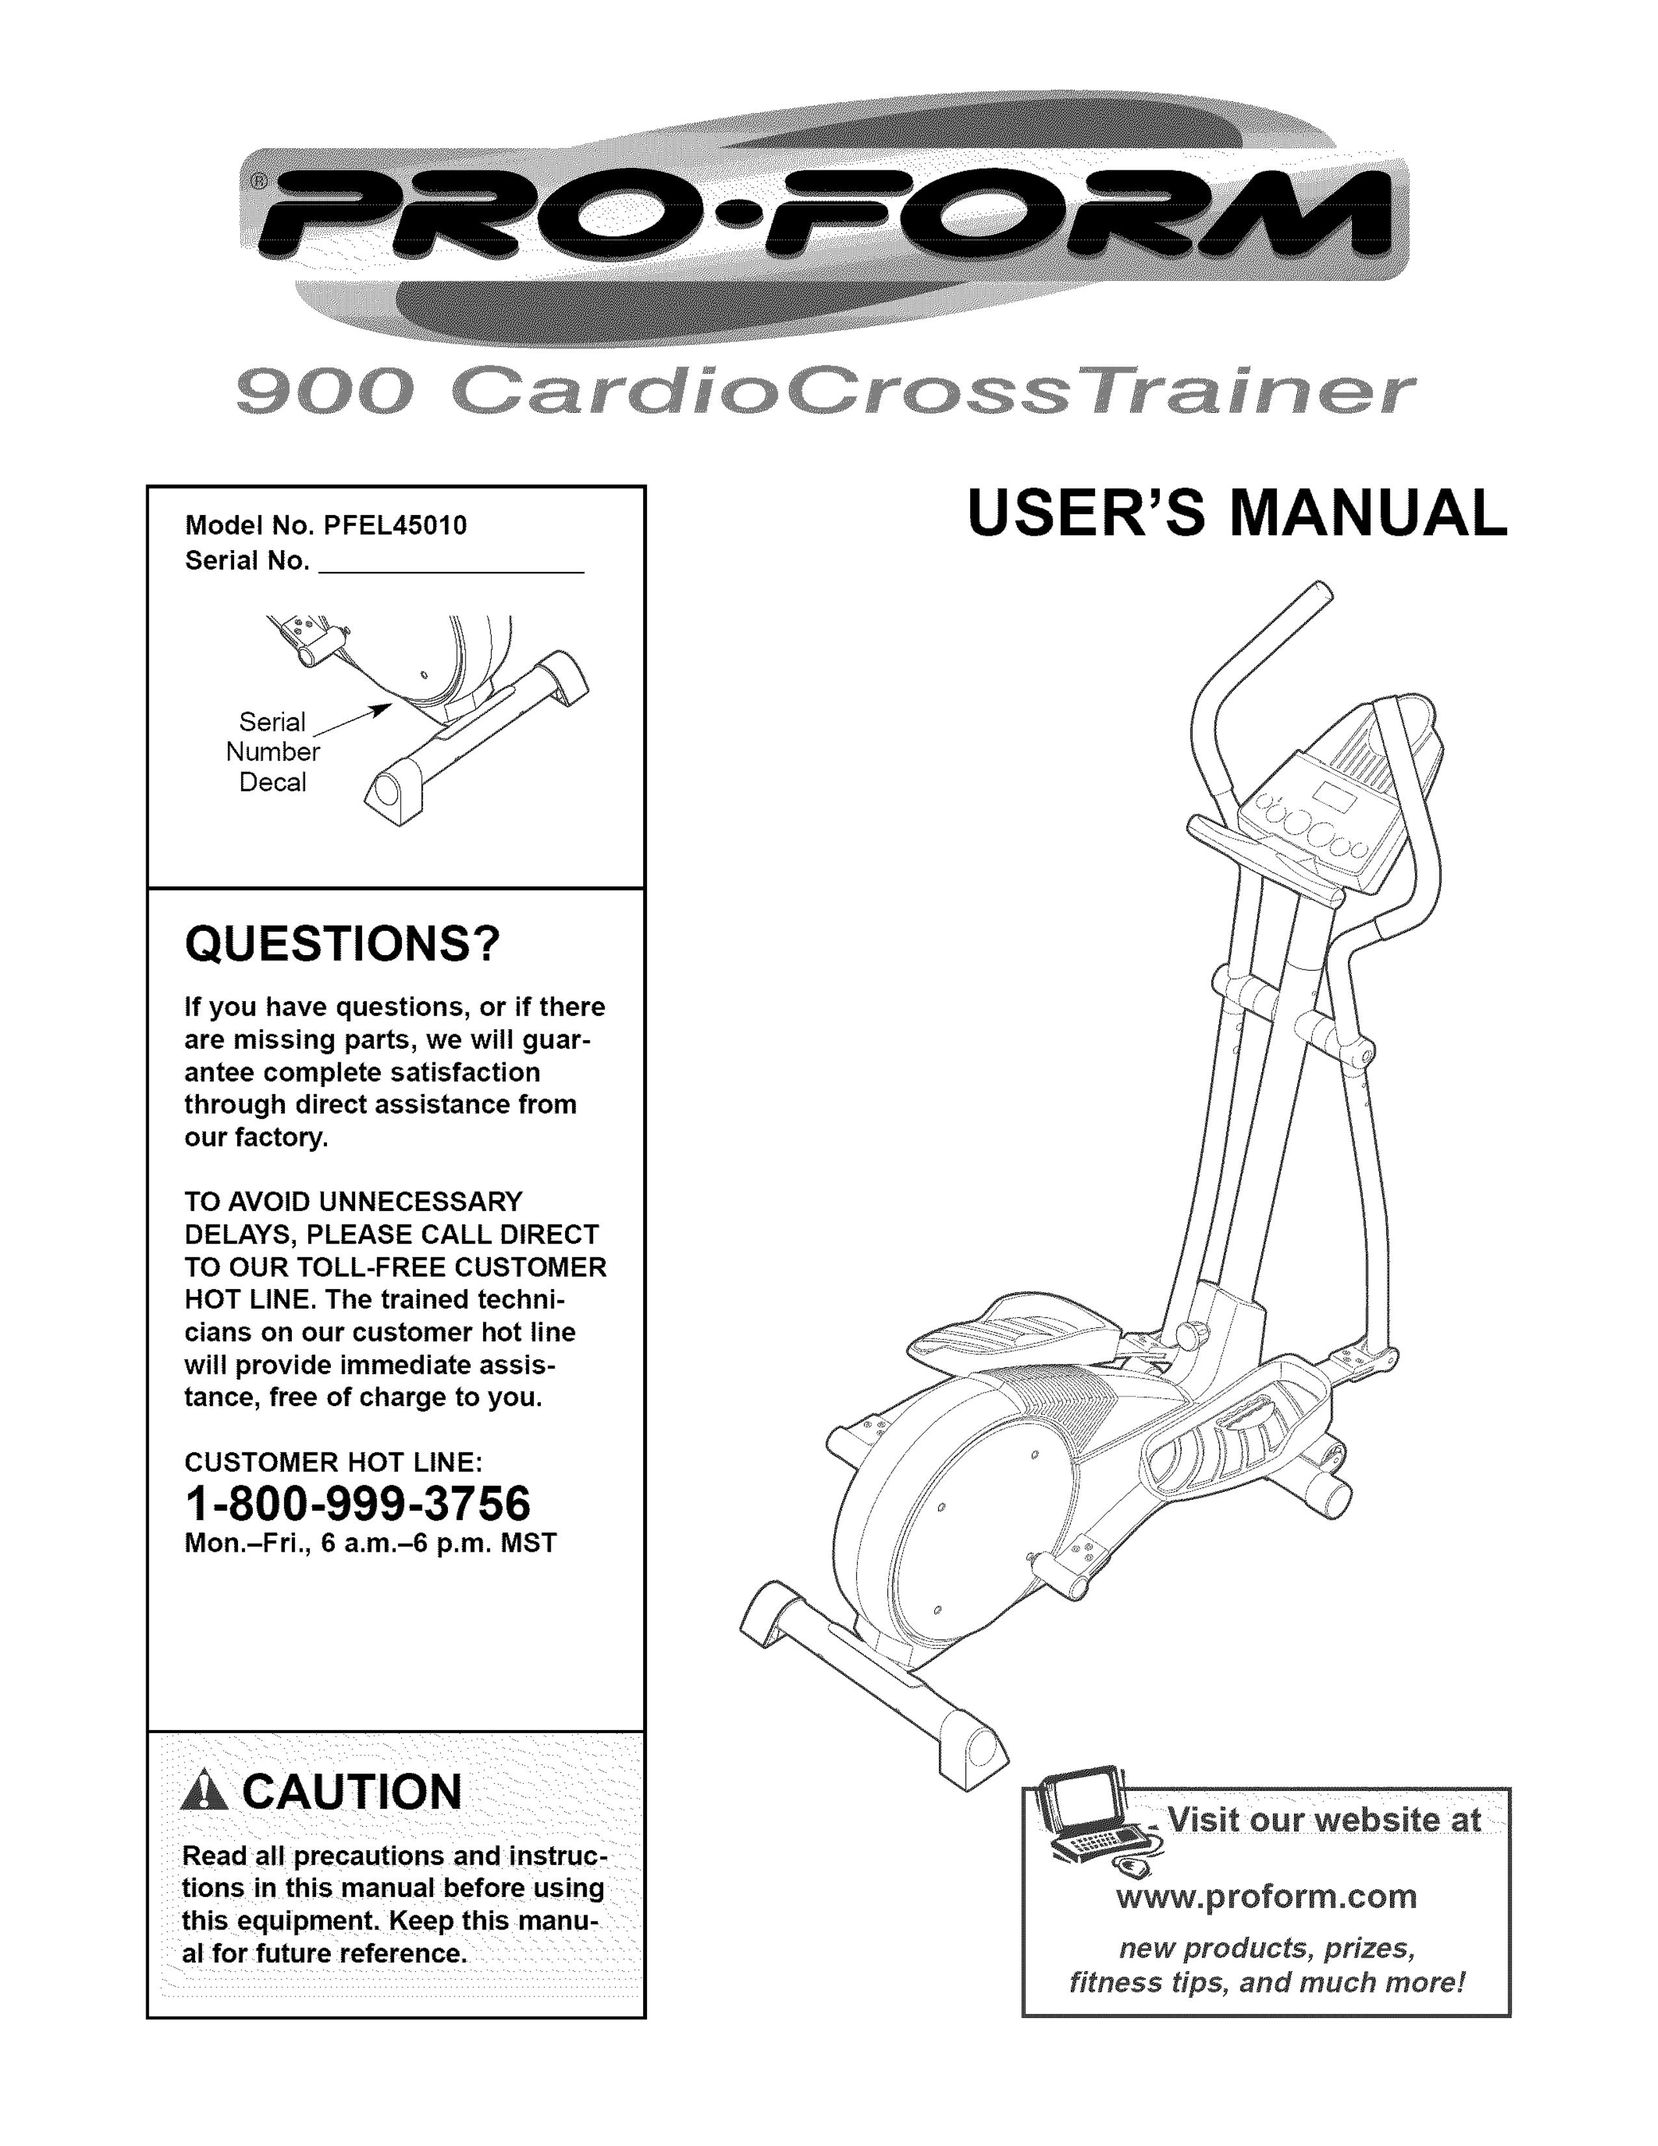 ProForm PFEL45010 Exercise Bike User Manual